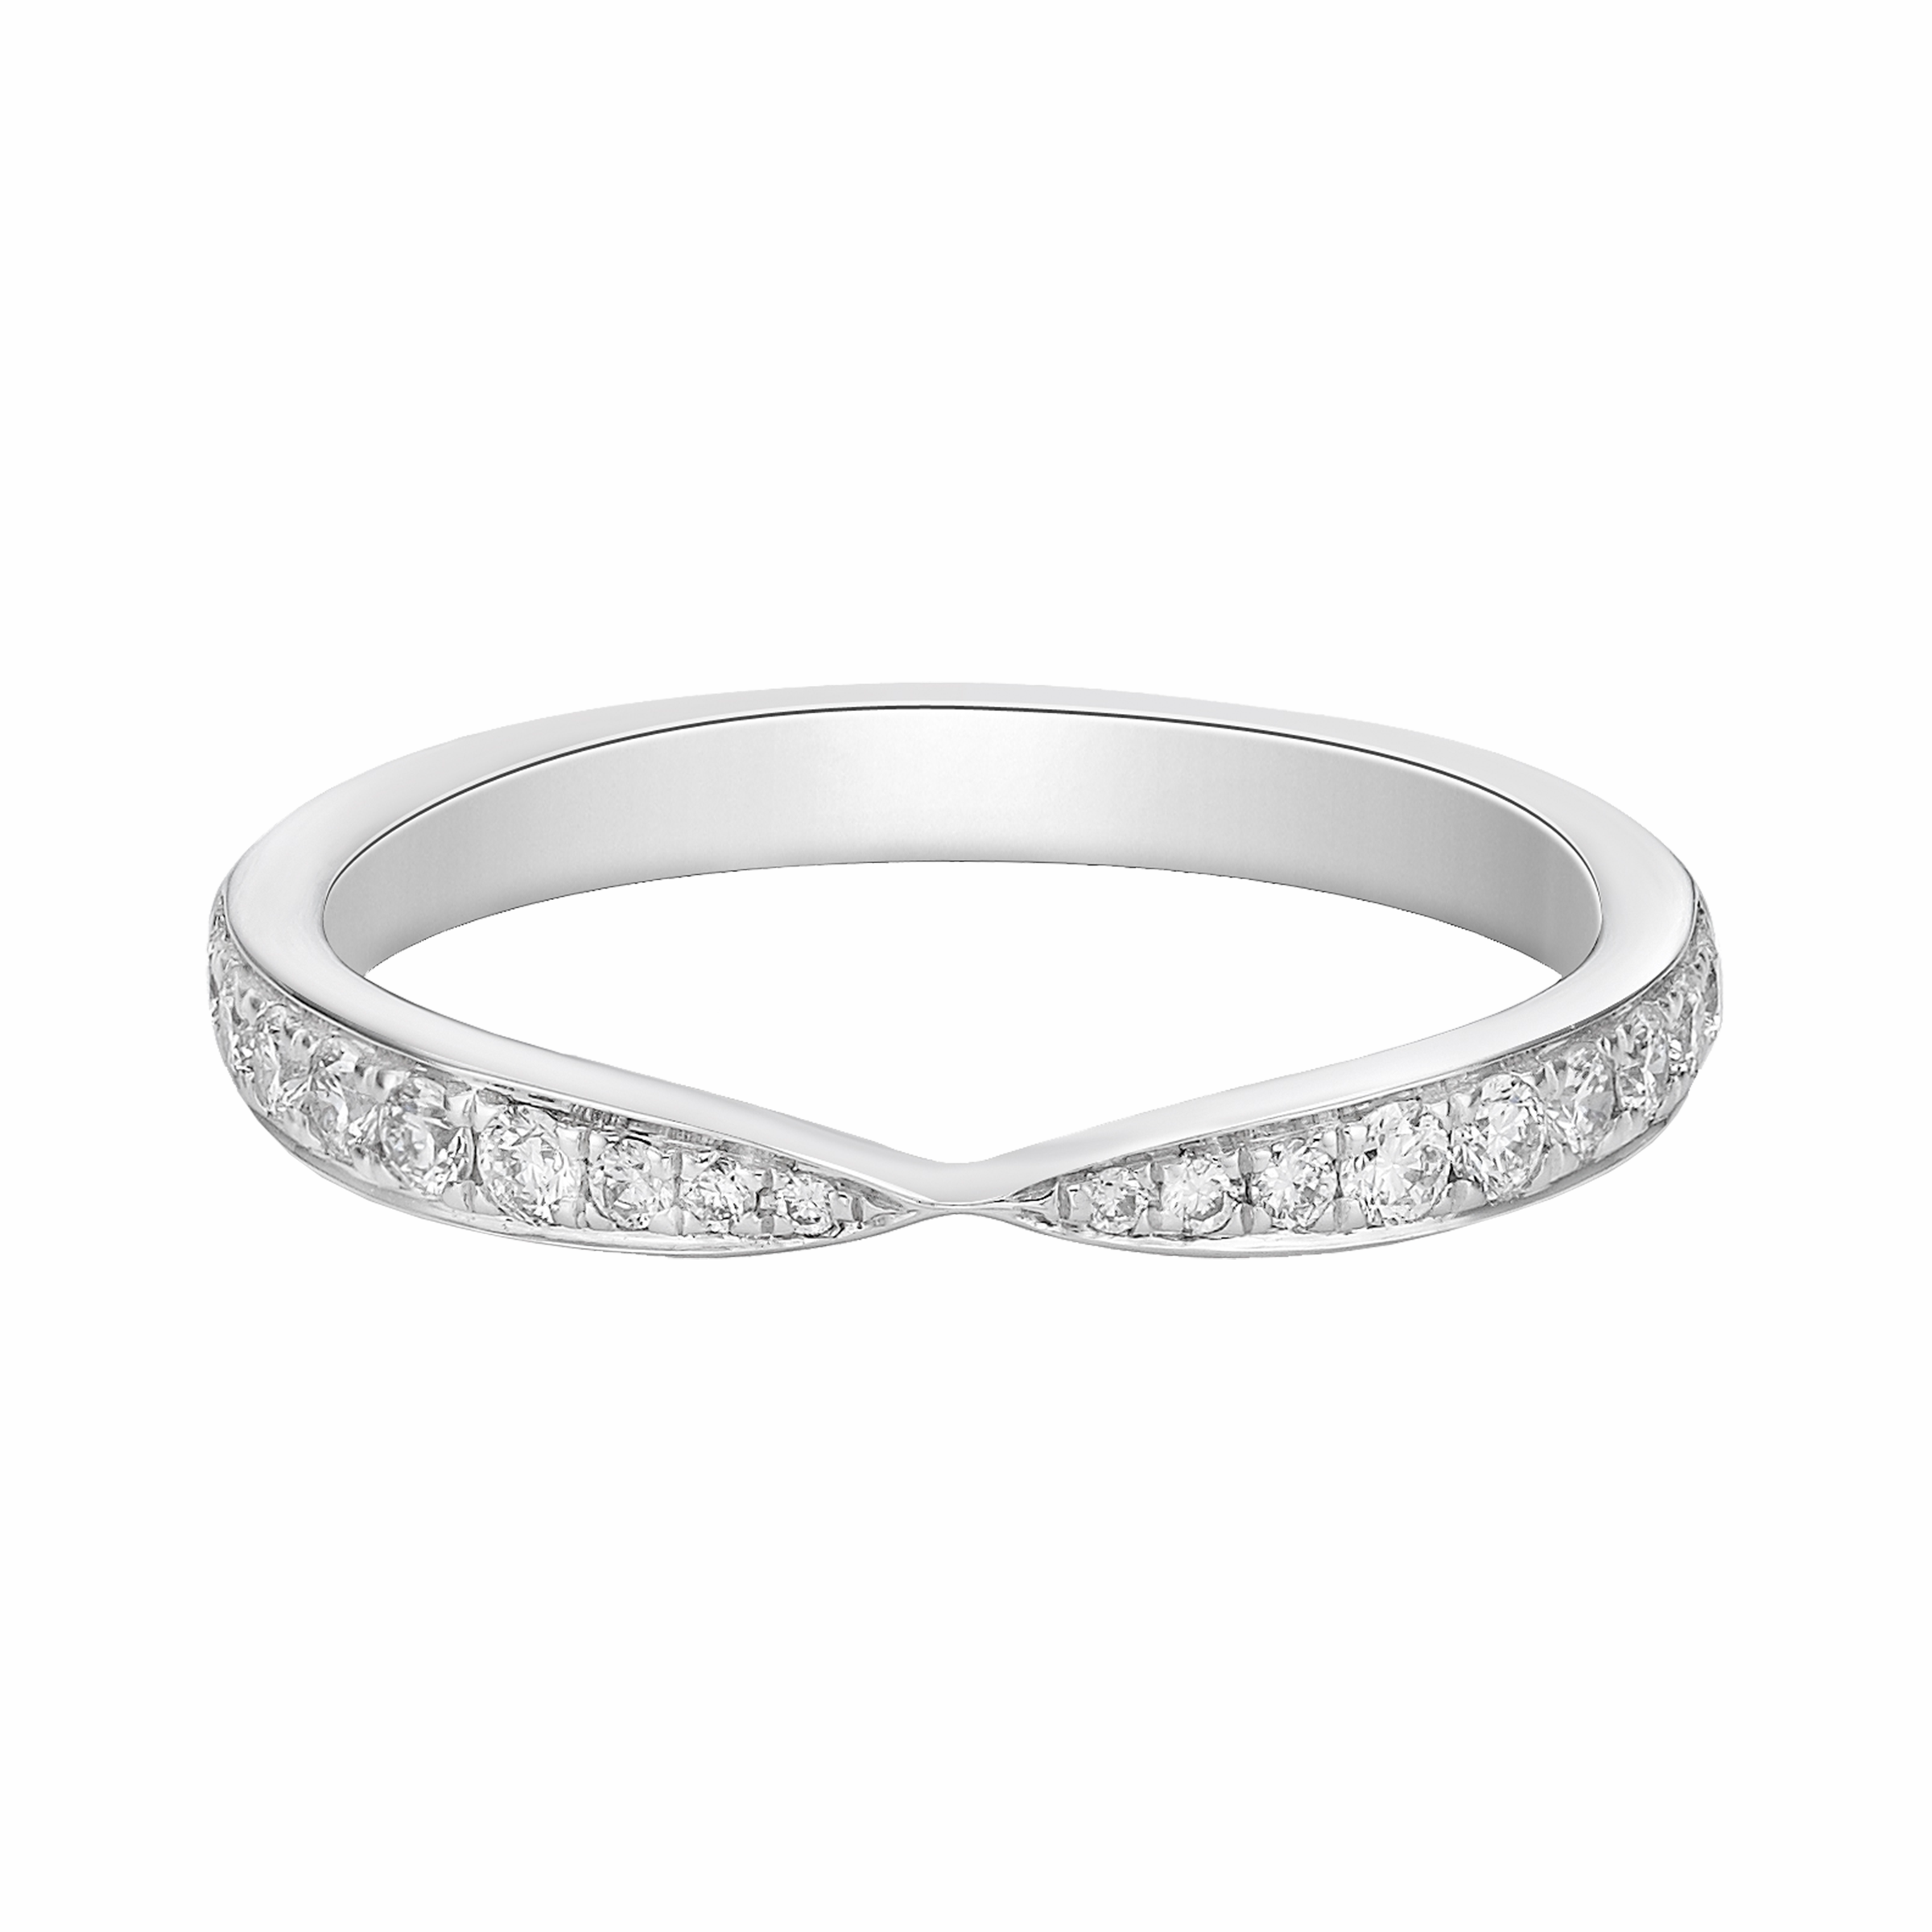 PINCHED GRAIN SET DIAMOND WEDDING ETERNITY RING